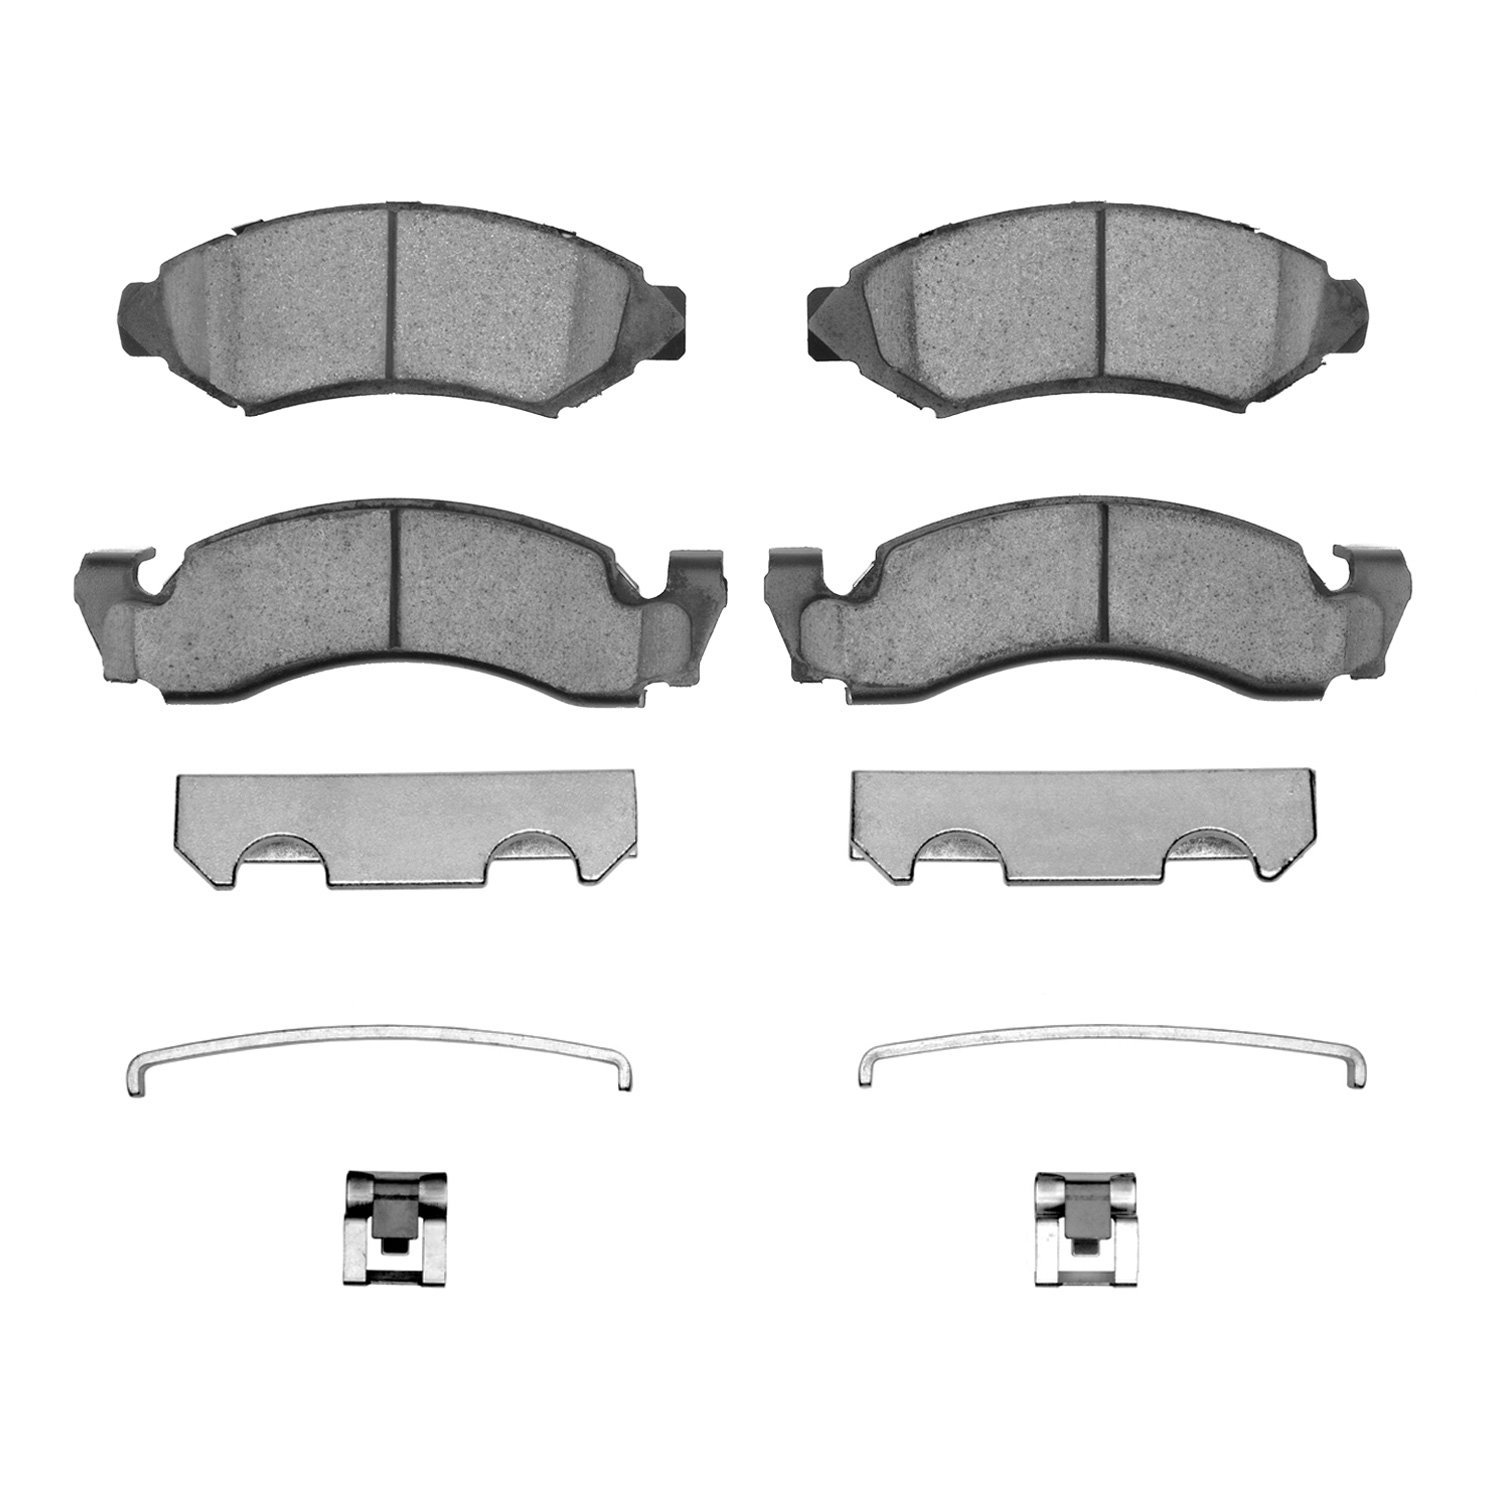 Semi-Metallic Brake Pads & Hardware Kit, 1972-1980 Fits Multiple Makes/Models, Position: Front